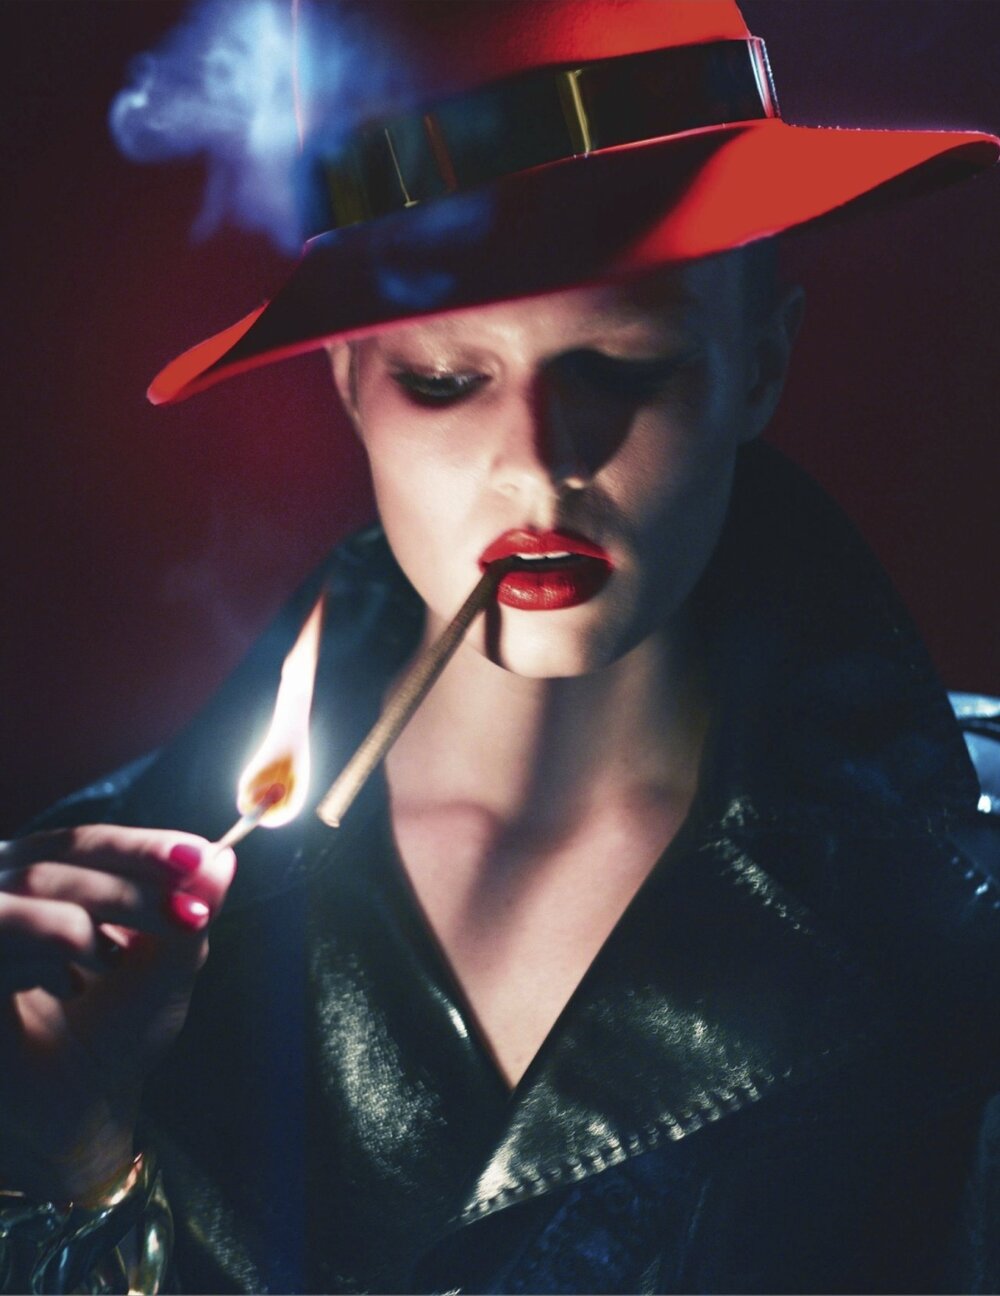  Lara Stone in “Femme Fatale” for Vogue Paris March 2014 by Mert &amp; Marcus; via trendhunter.com 